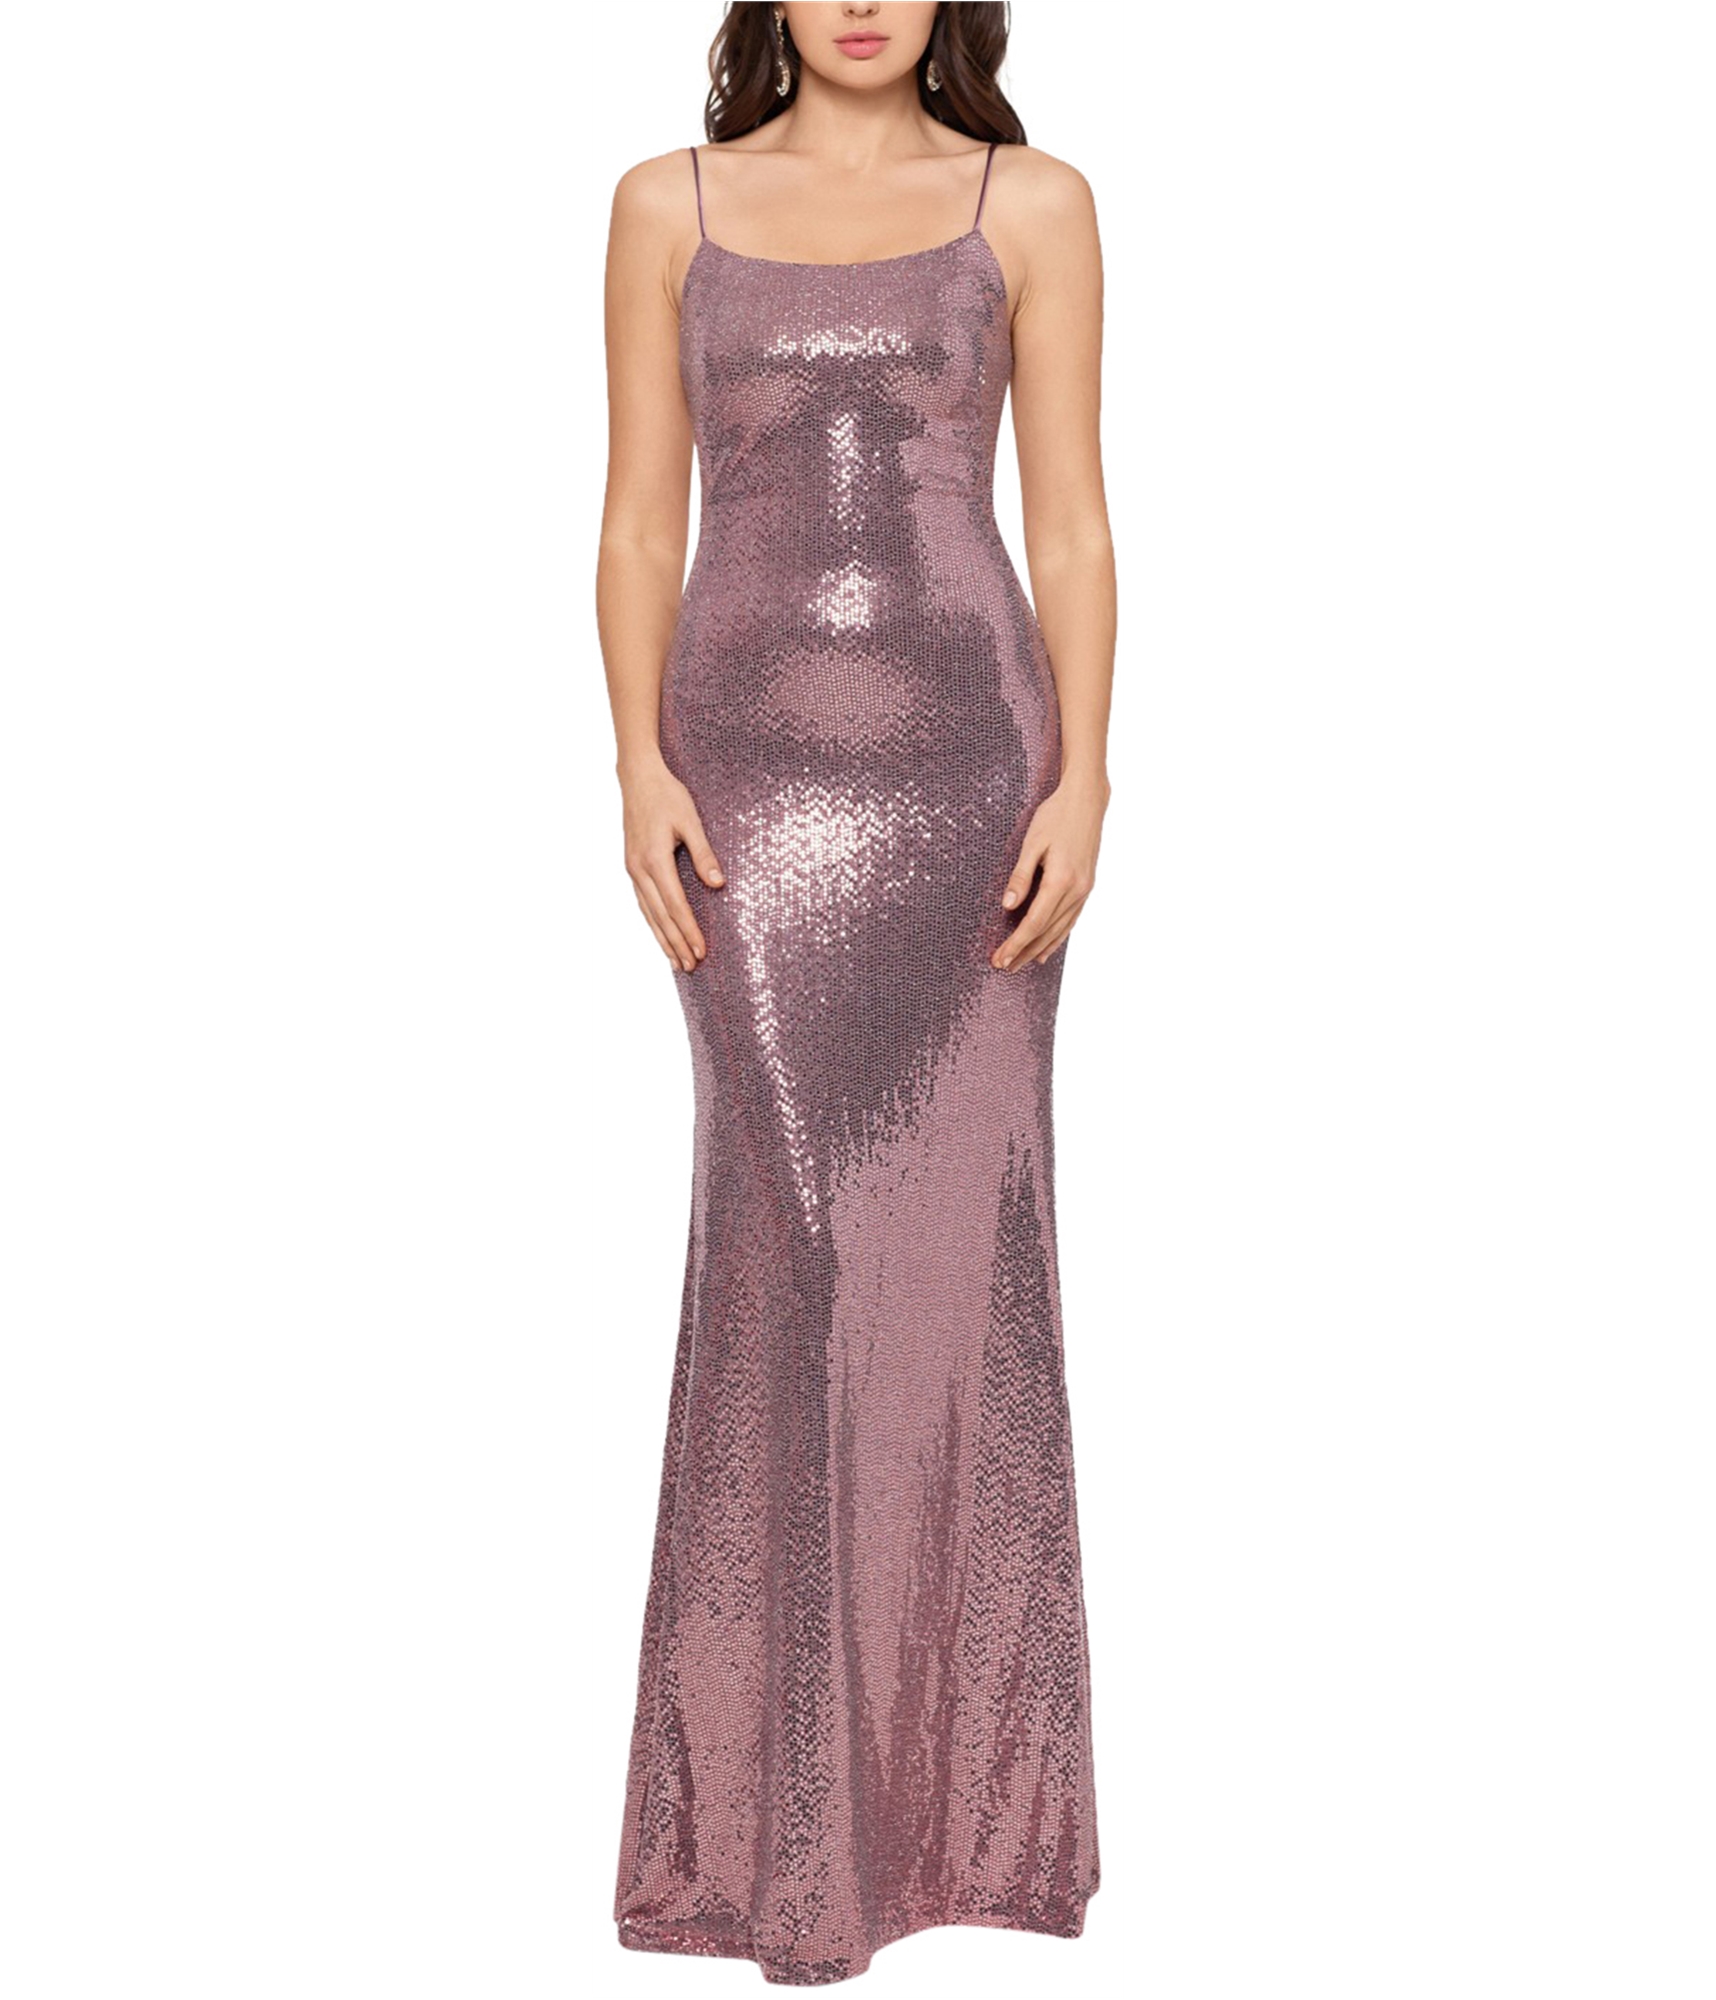 Woman-wearing-metallic-gown-dress